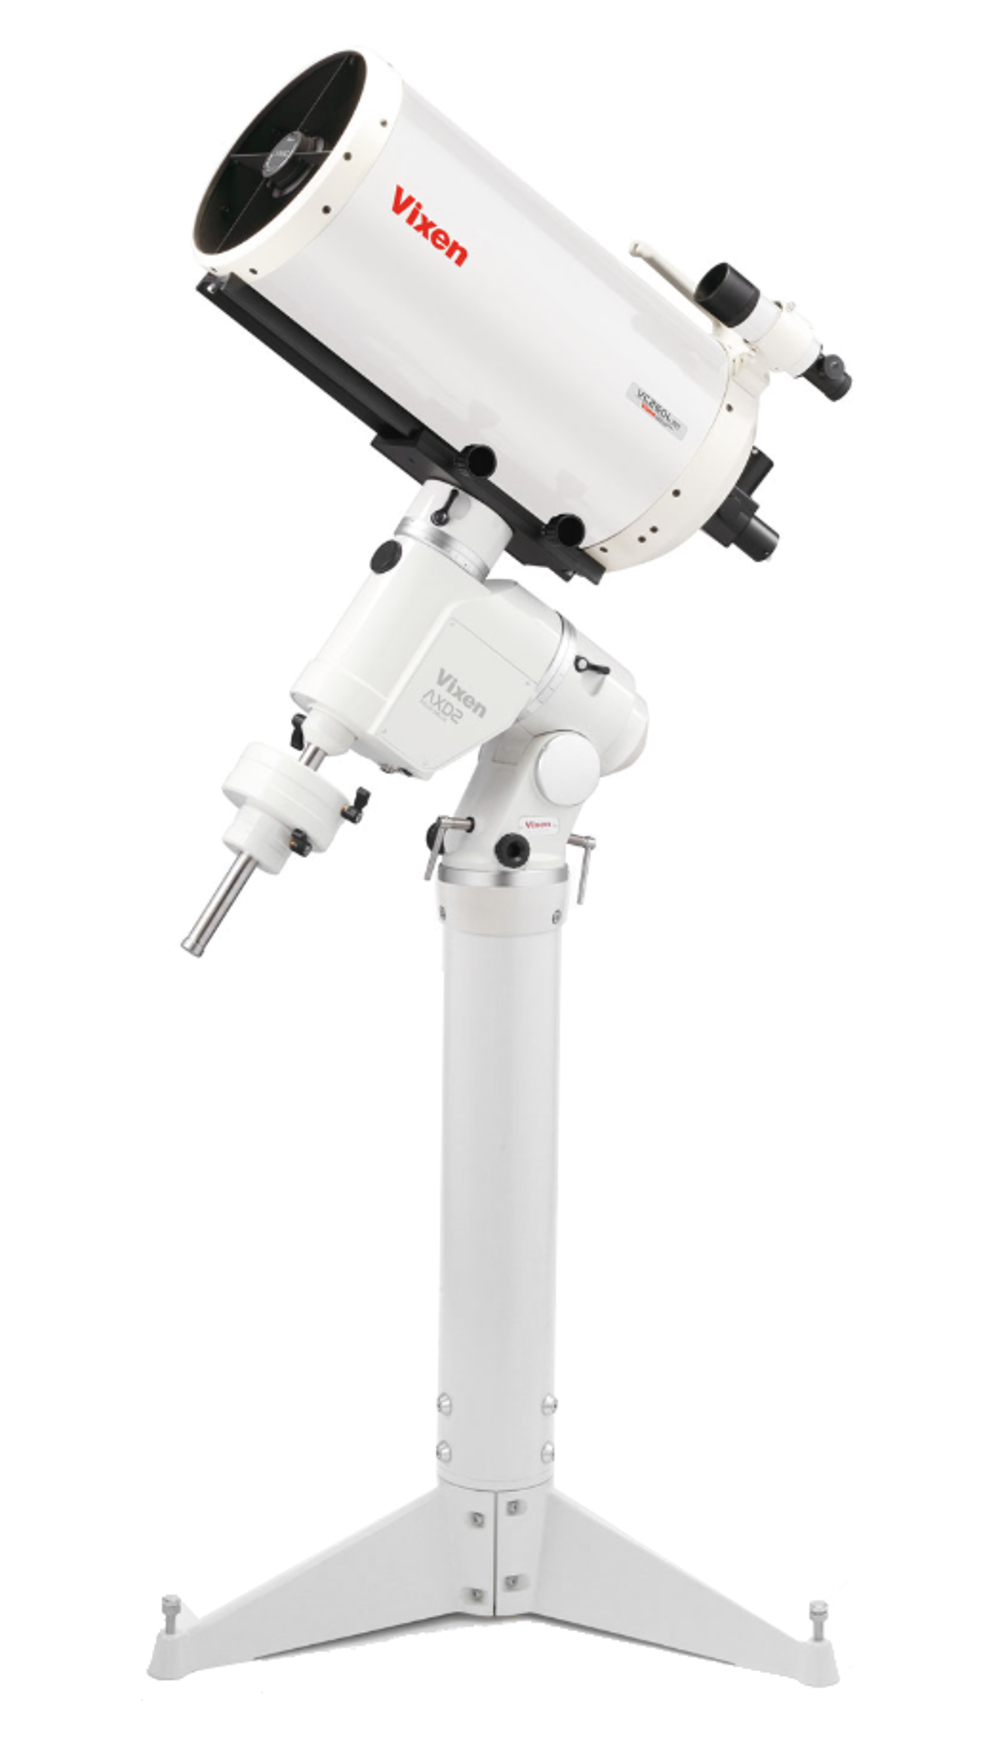 Monture Vixen AXD2 avec télescope Maksutov-Cassegrain VMC 260